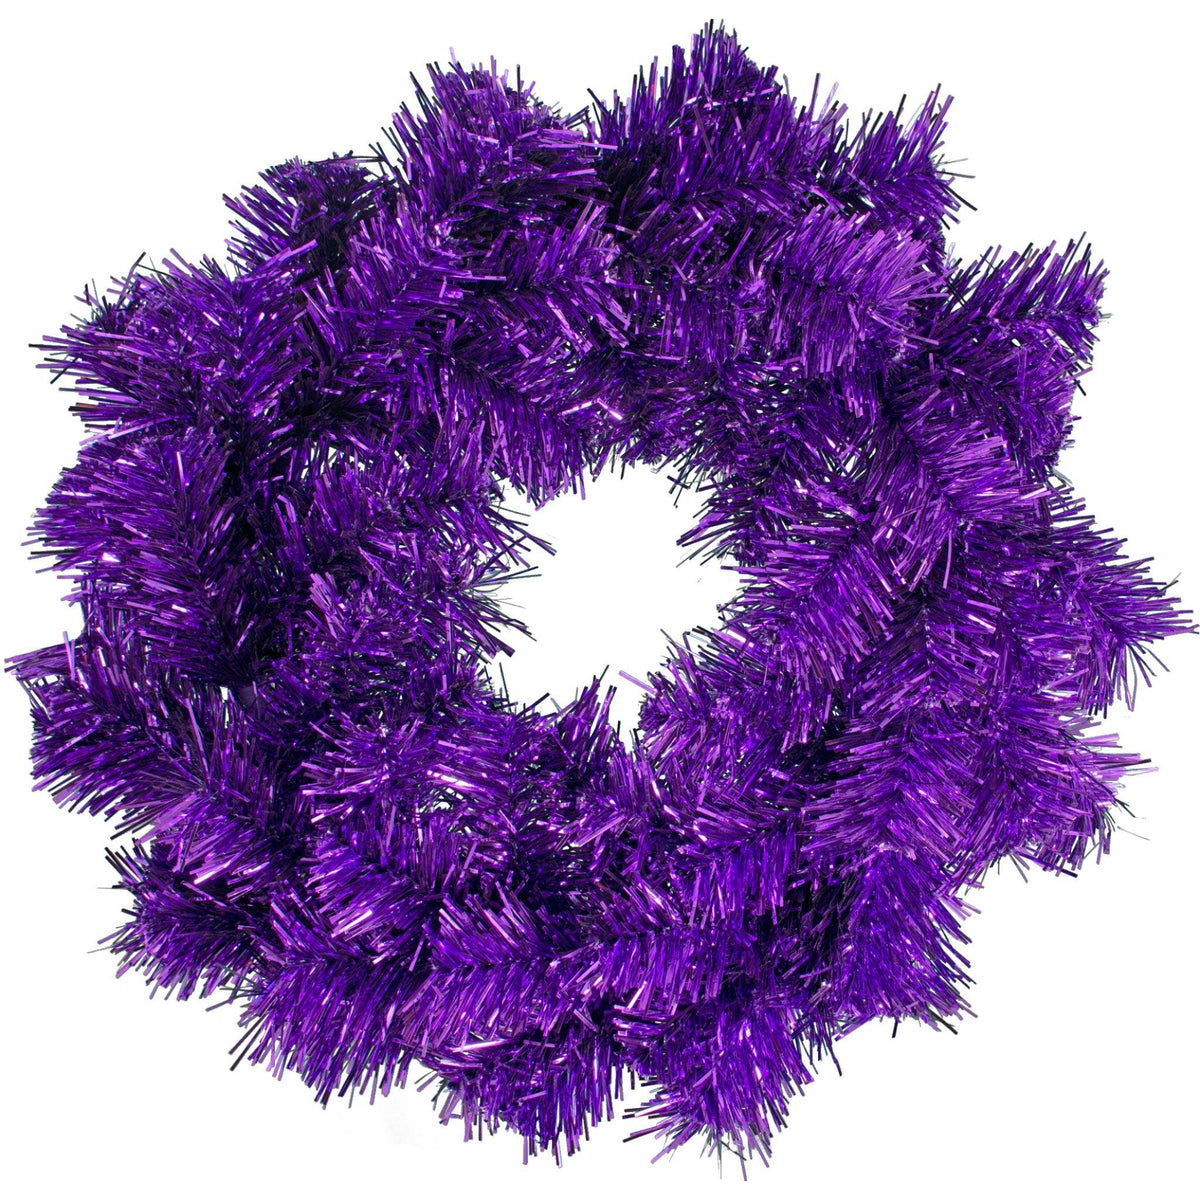 18in Diameter Purple Tinsel Christmas Wreath on sale at leedisplay.com